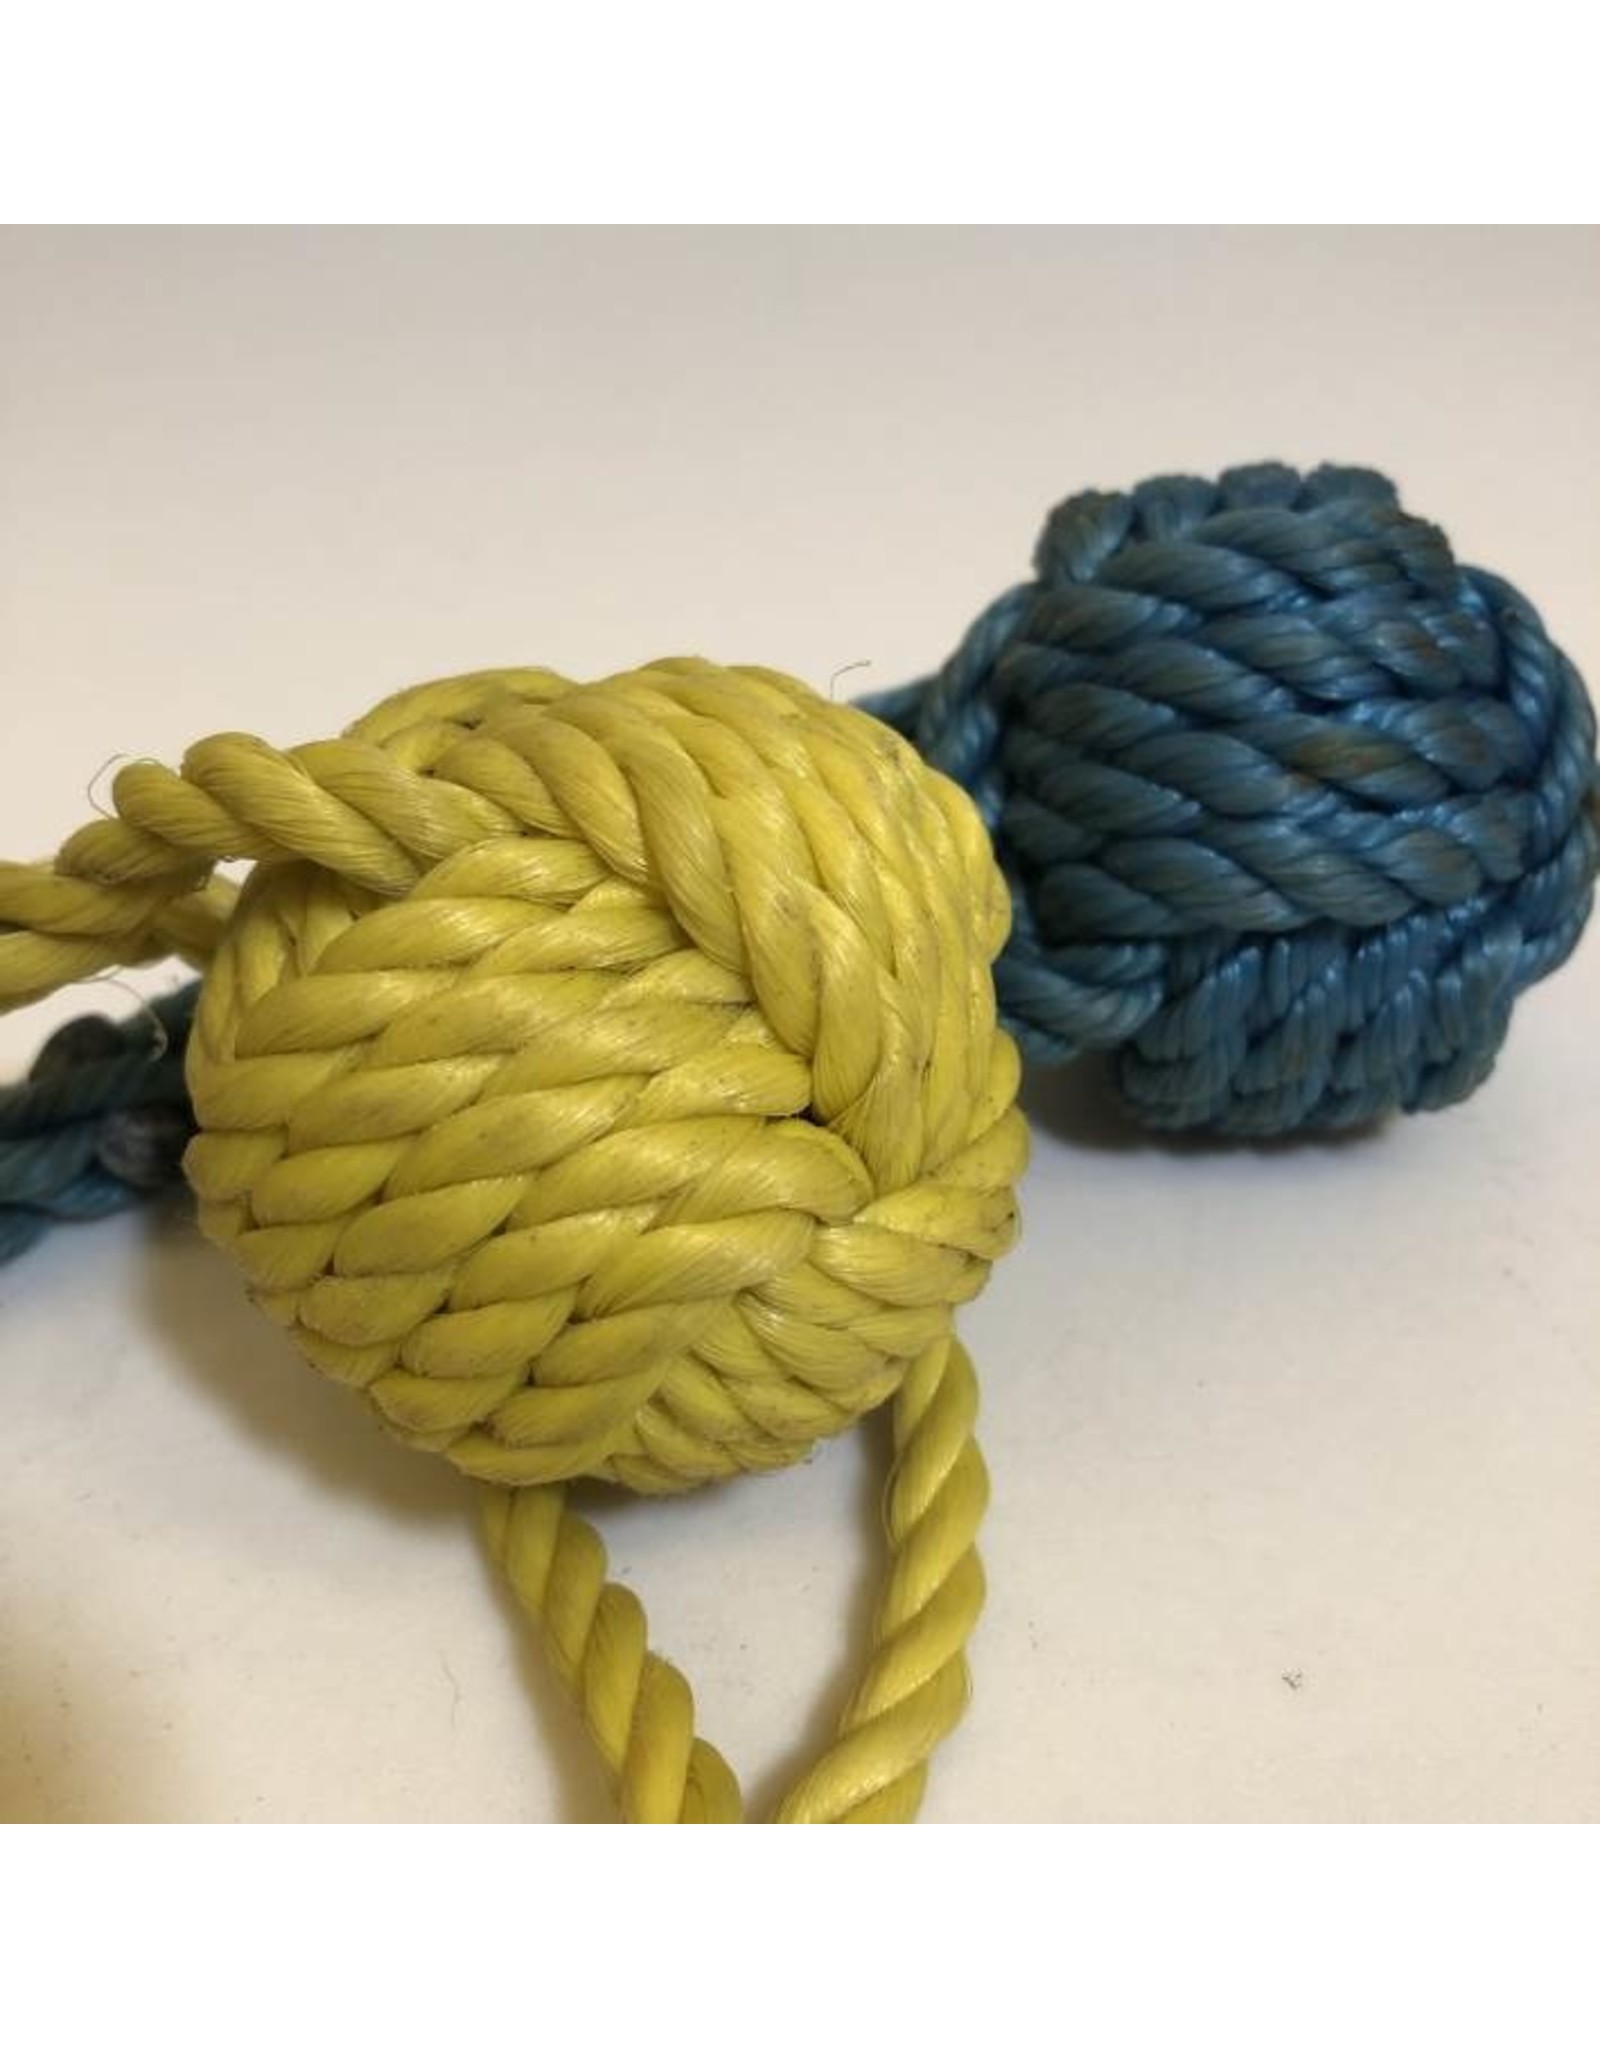 Monkey fist - rope, marine